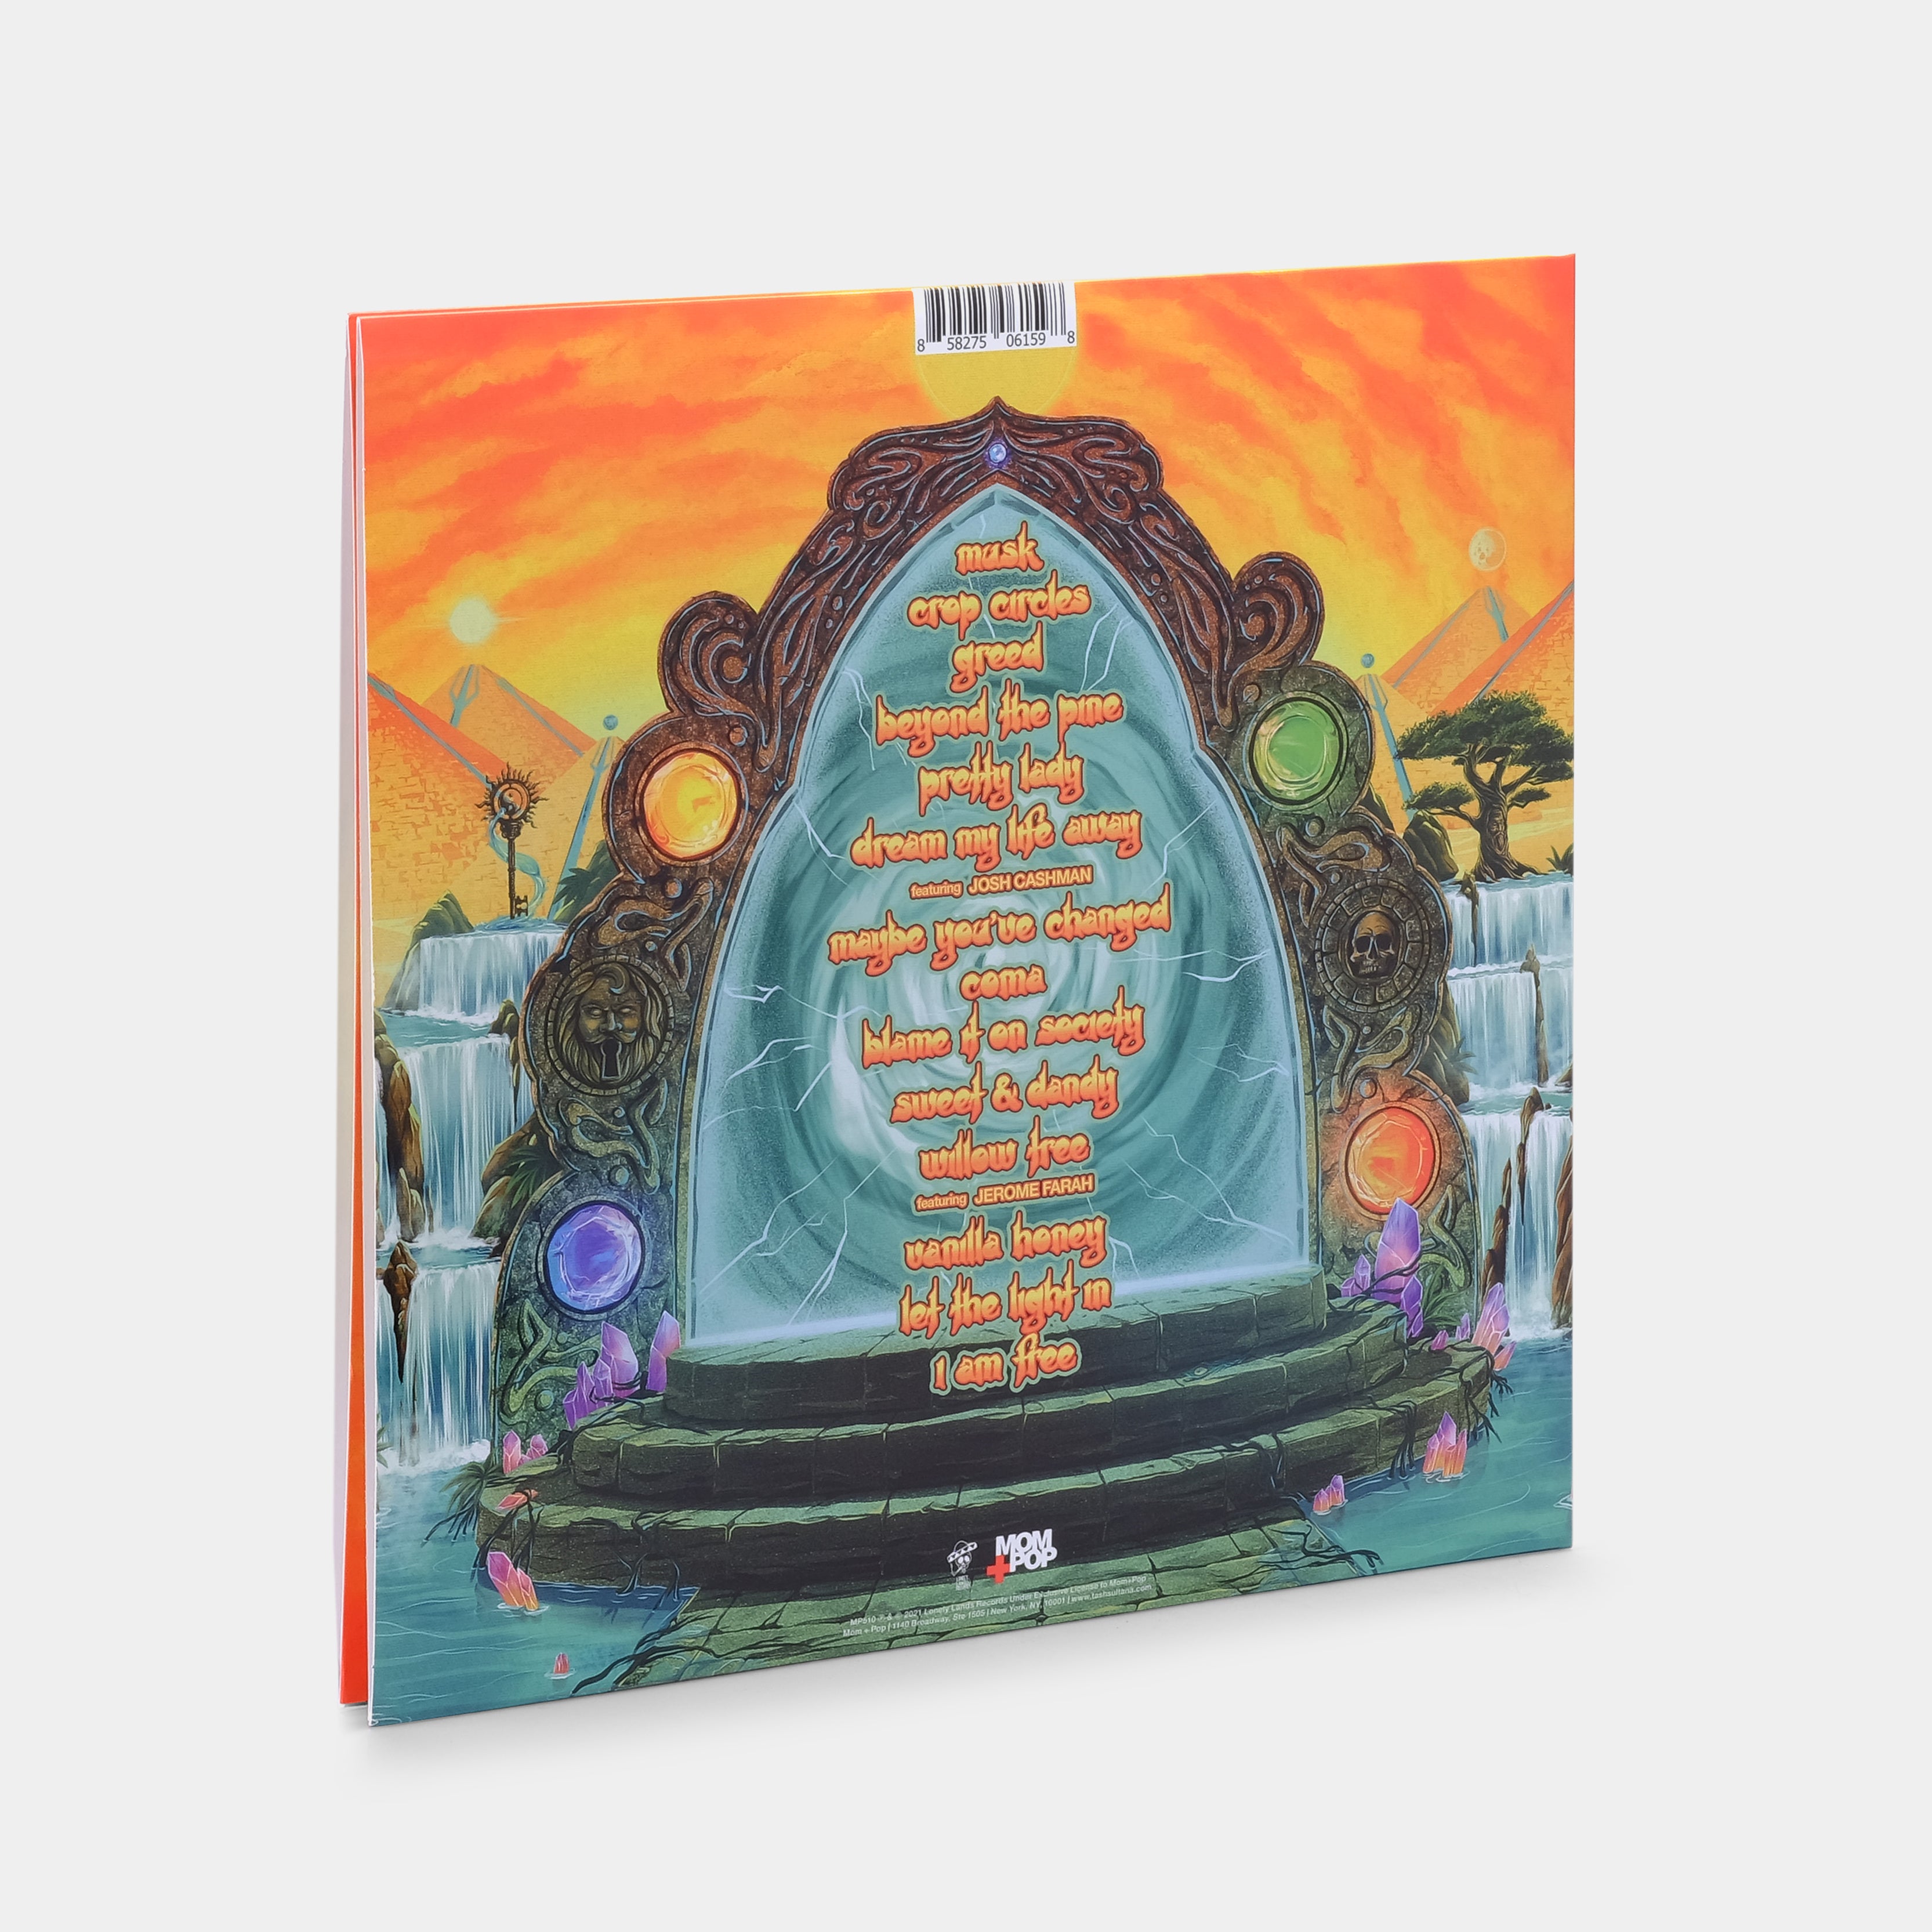 Tash Sultana - Terra Firma 2xLP Vinyl Record